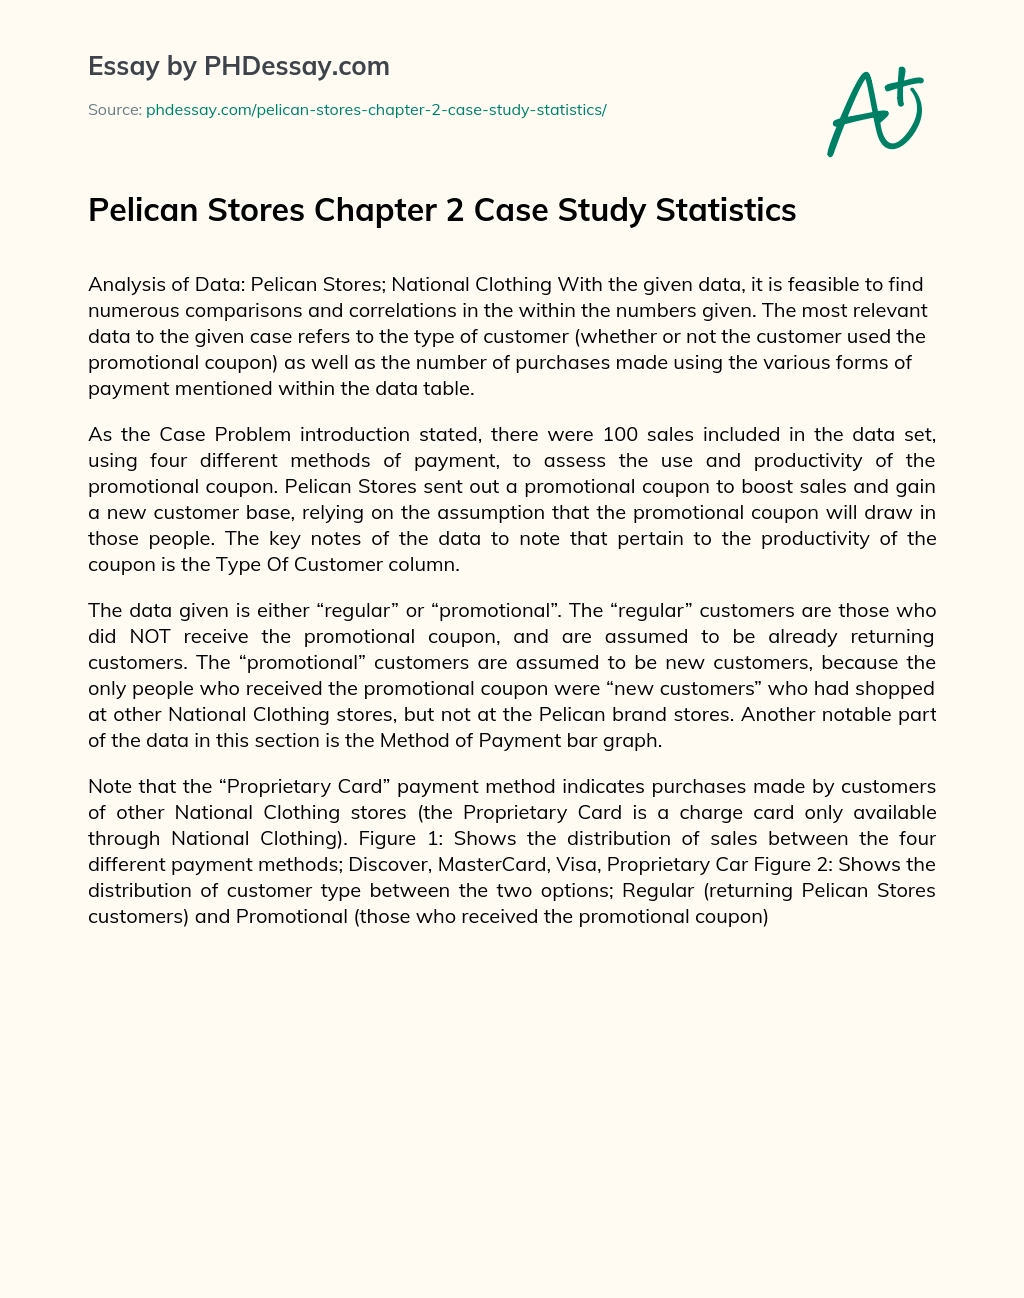 Pelican Stores Chapter 2 Case Study Statistics essay